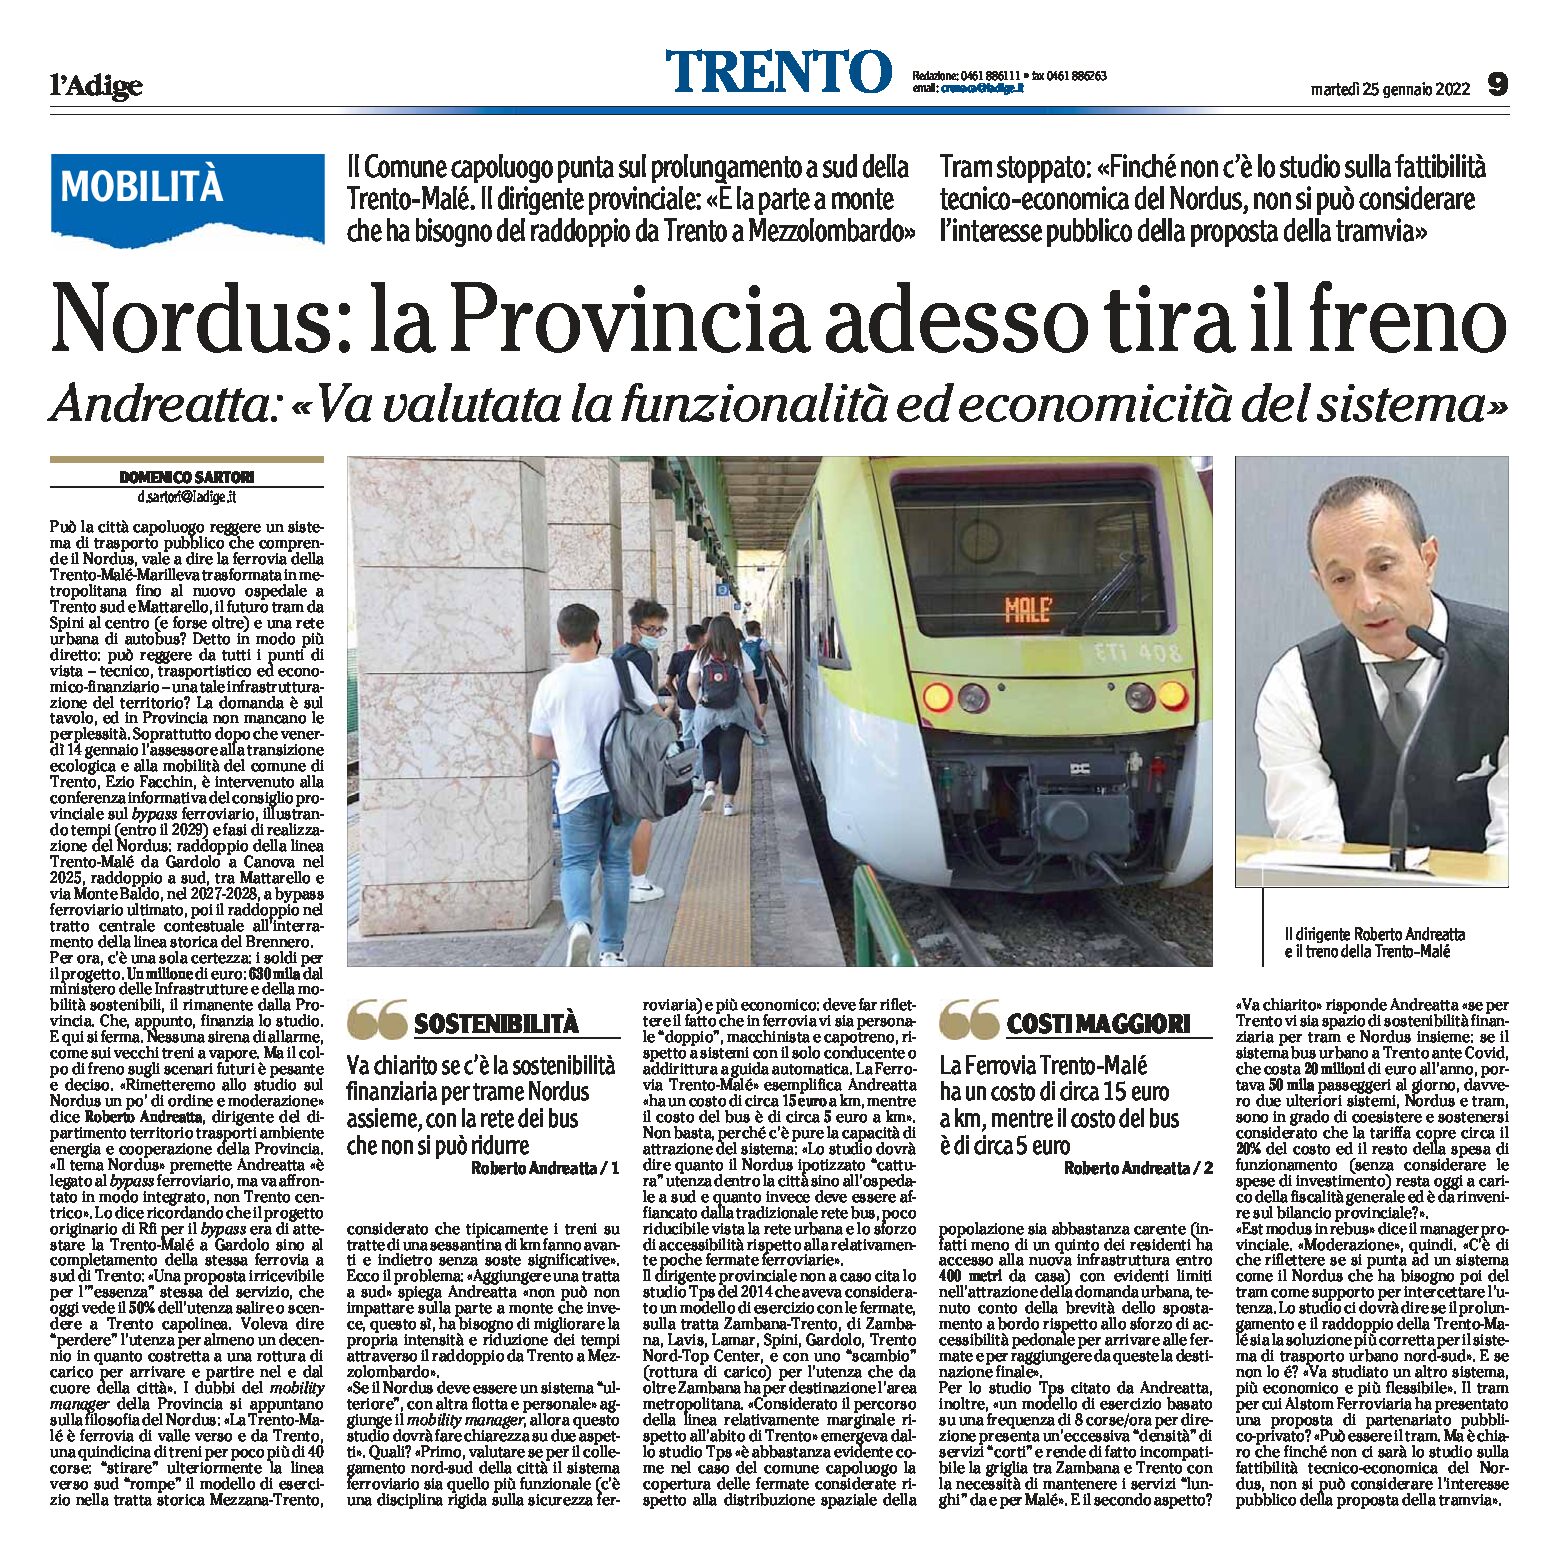 Trento, Nordus: la Provincia adesso frena